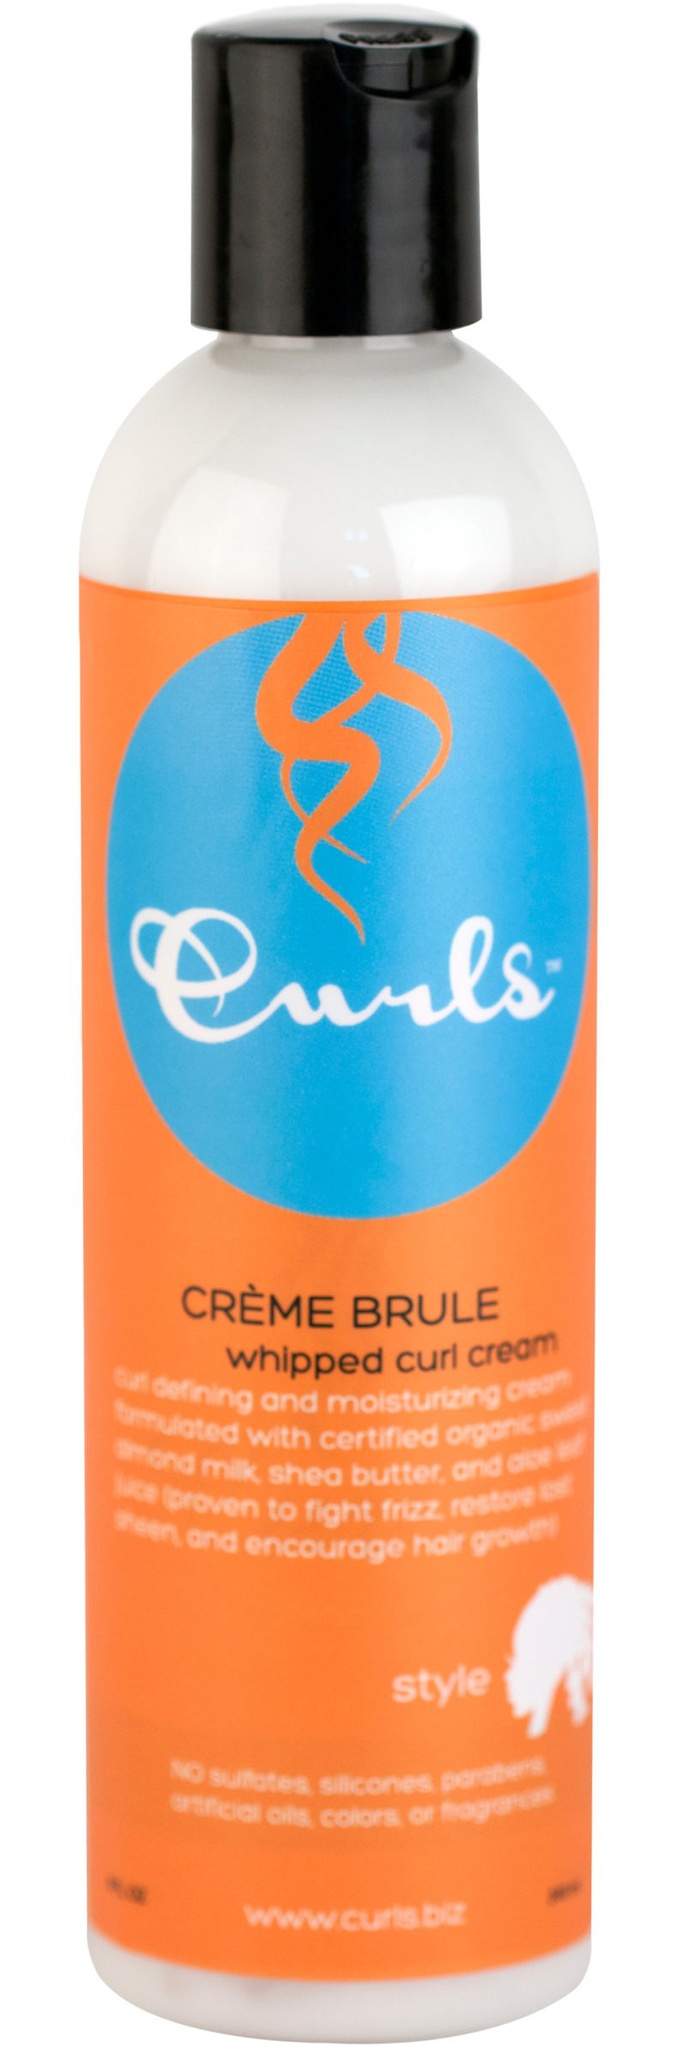 Curls Crème Brûlée Whipped Curl Cream